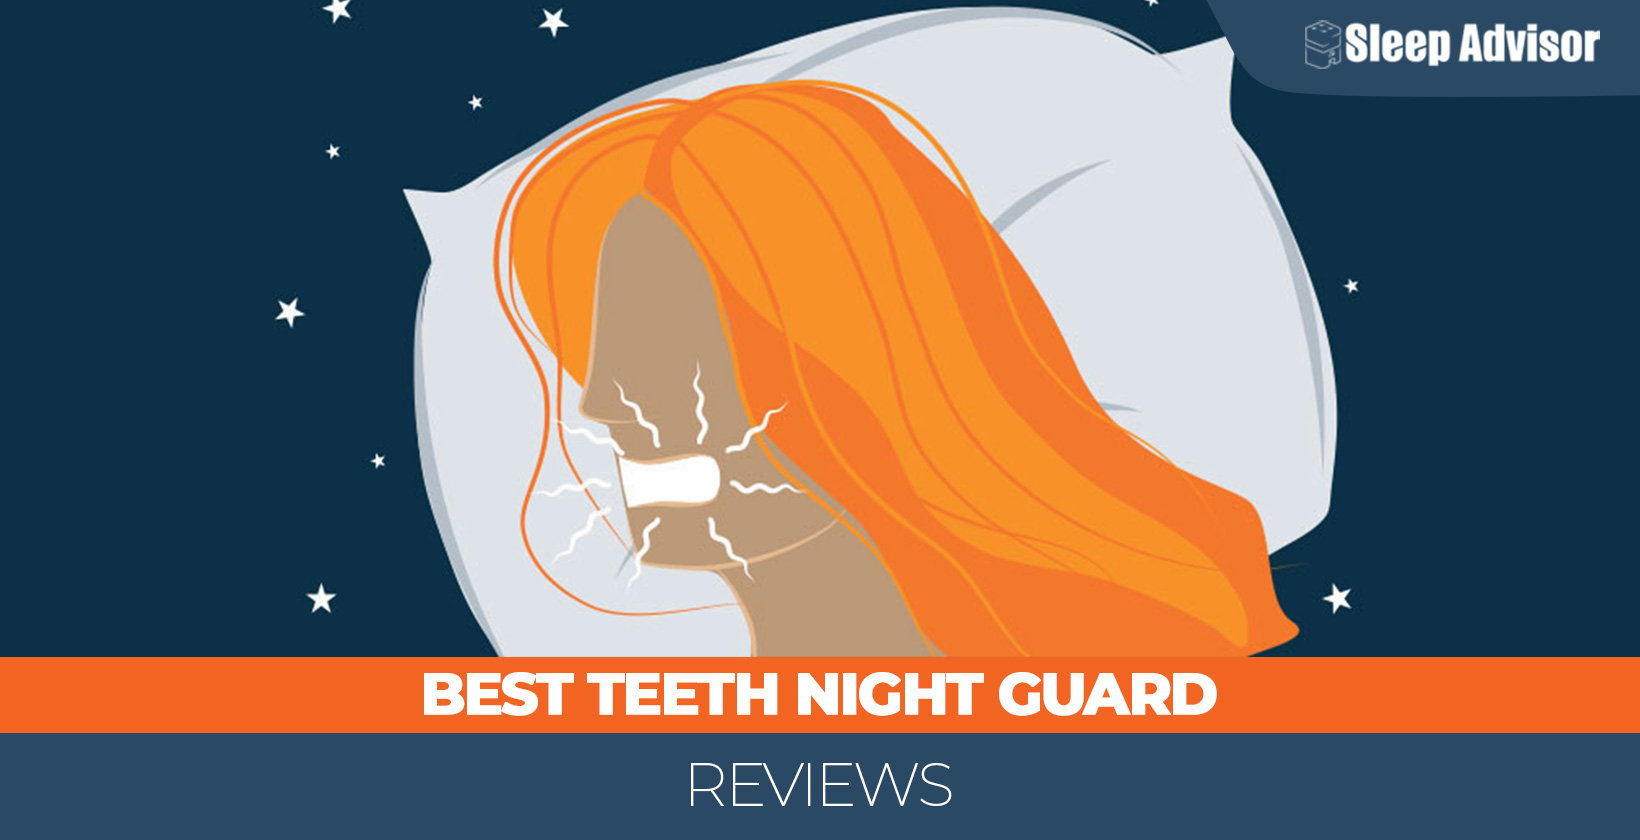 best teeth night guard Reviews 1640x840px